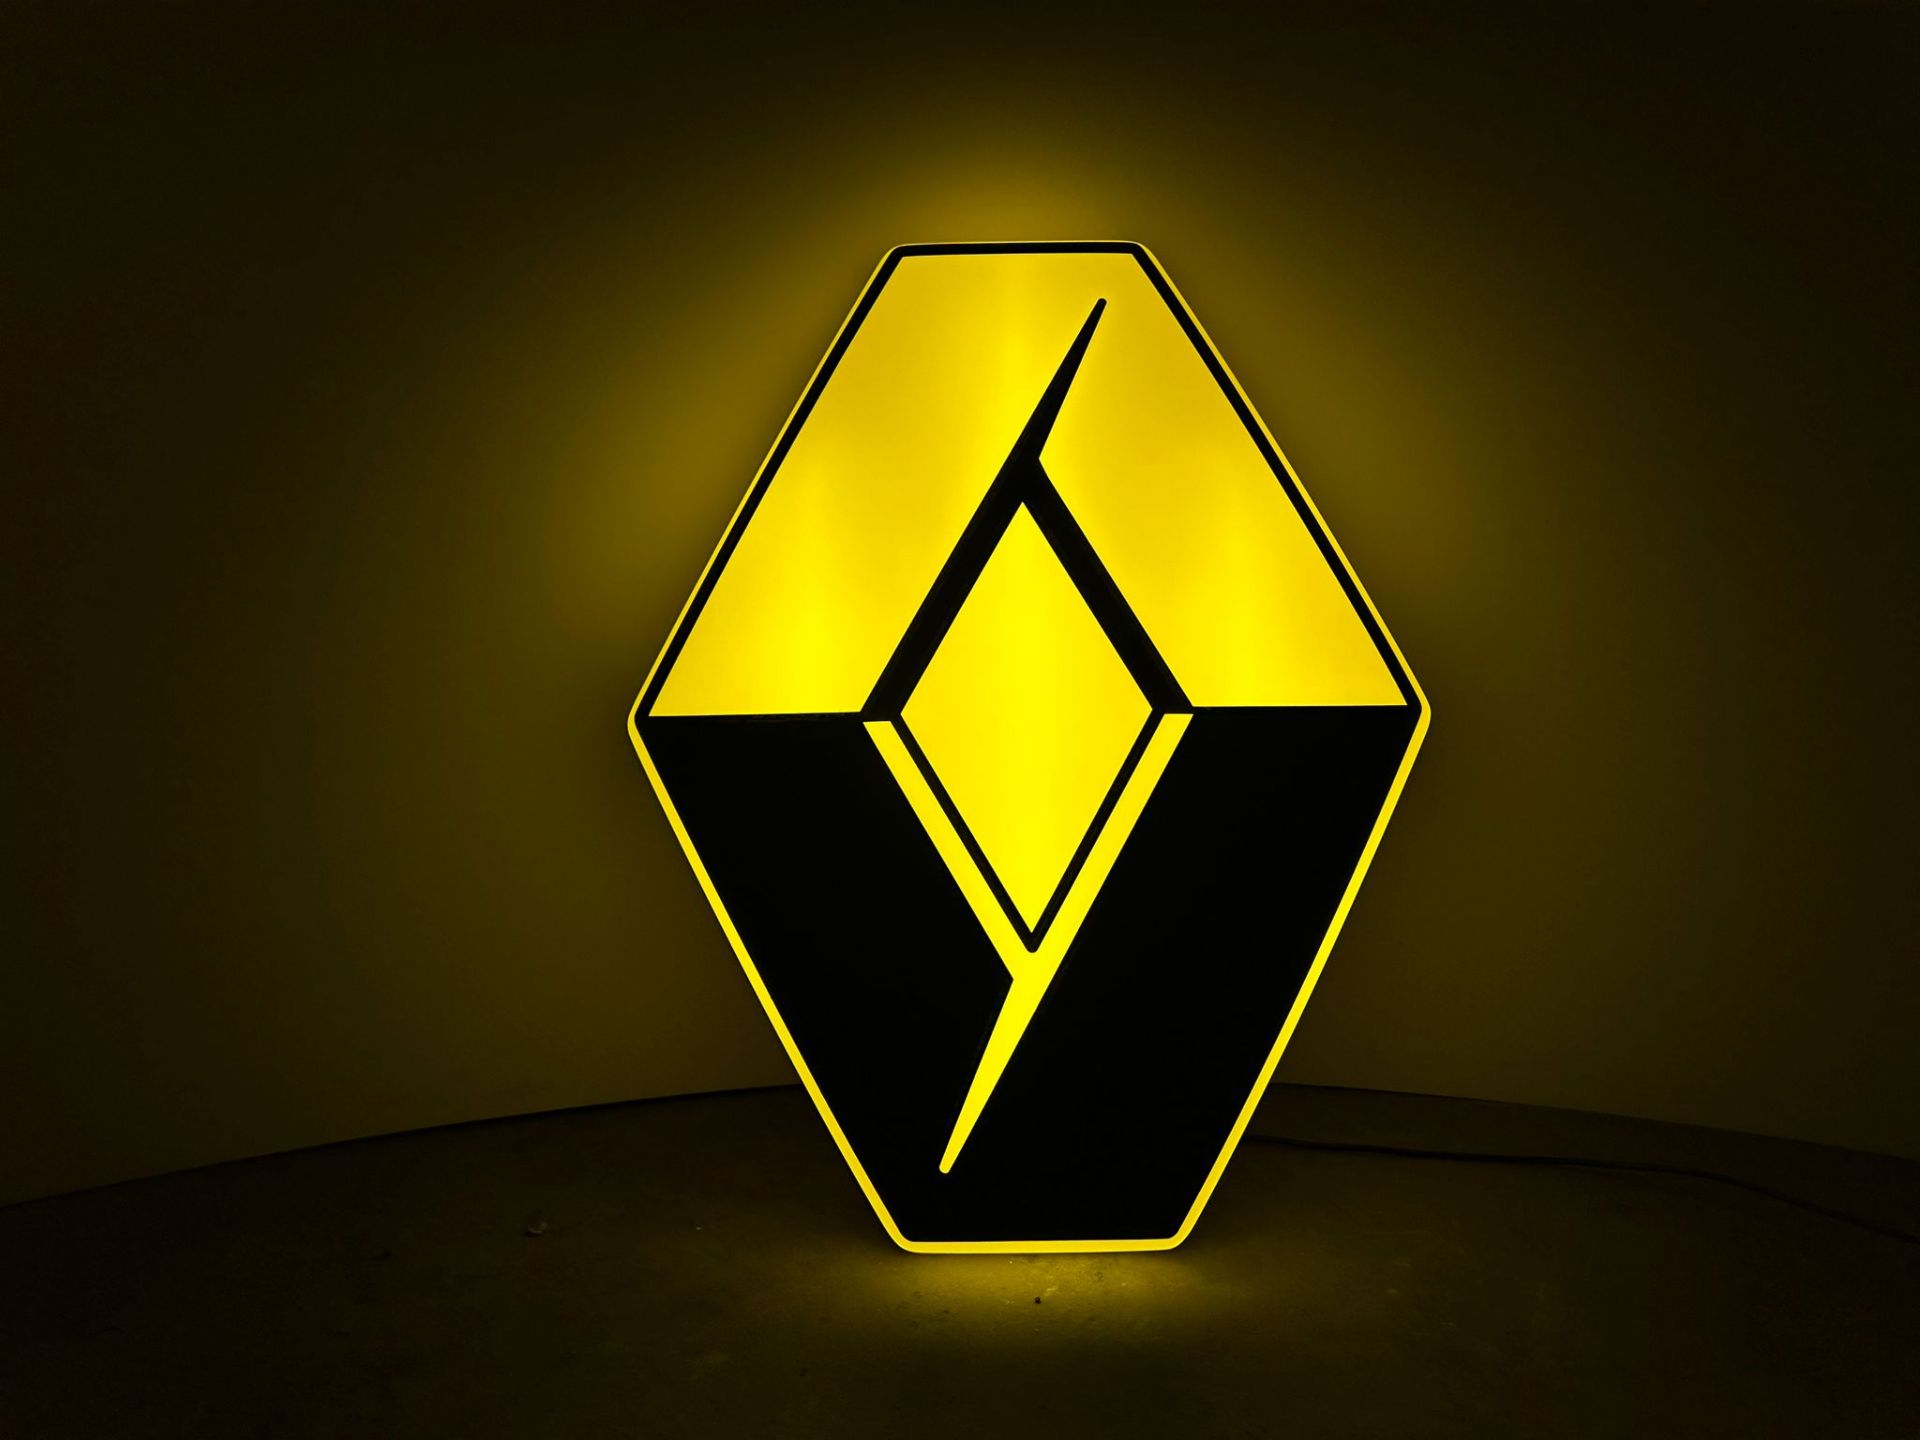 Renault - sign illuminated - Image 4 of 6